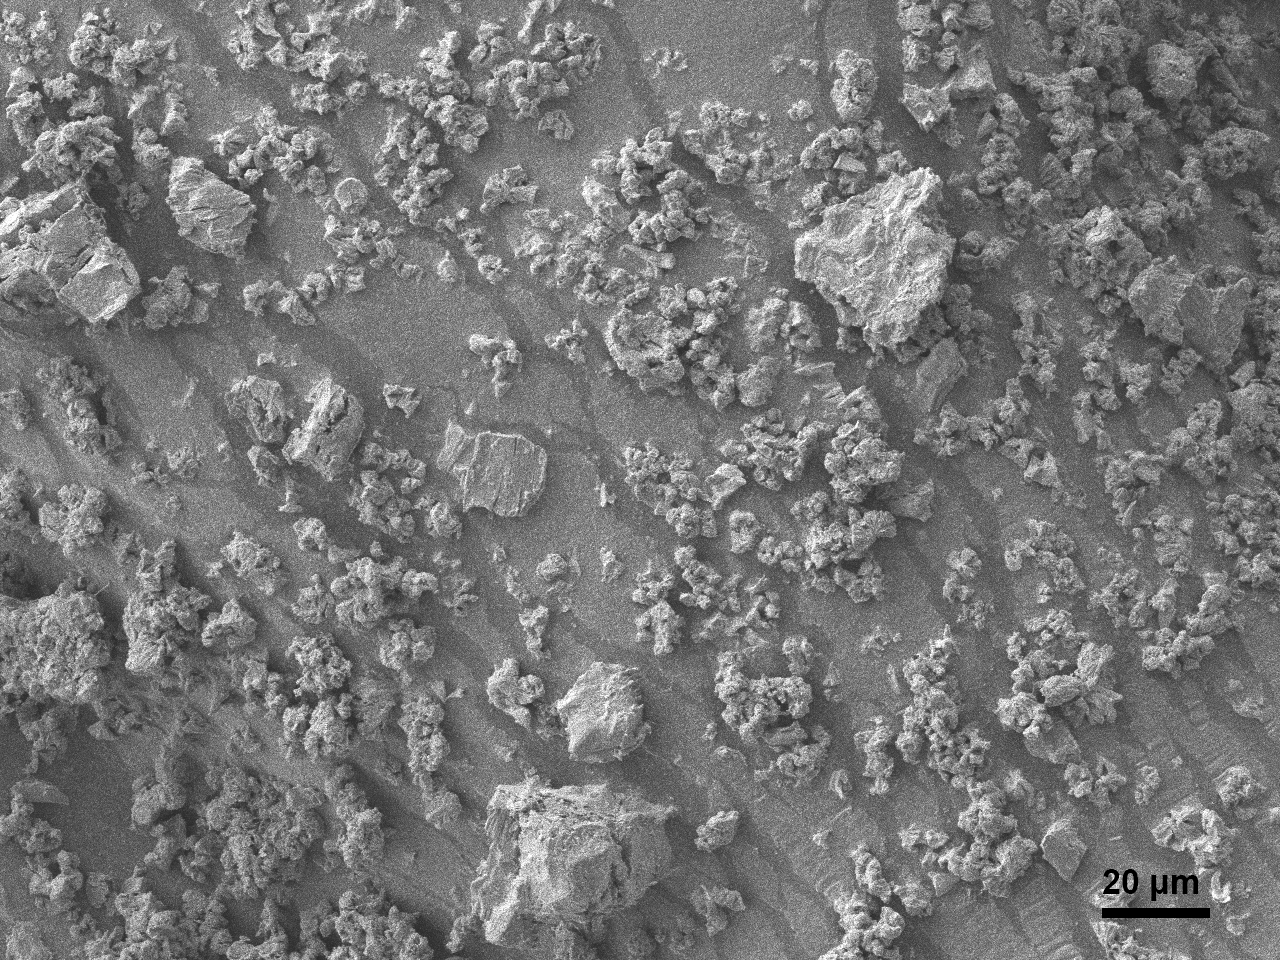 Typical SEM Images of ACS Material MoS2 Powder 15 μm